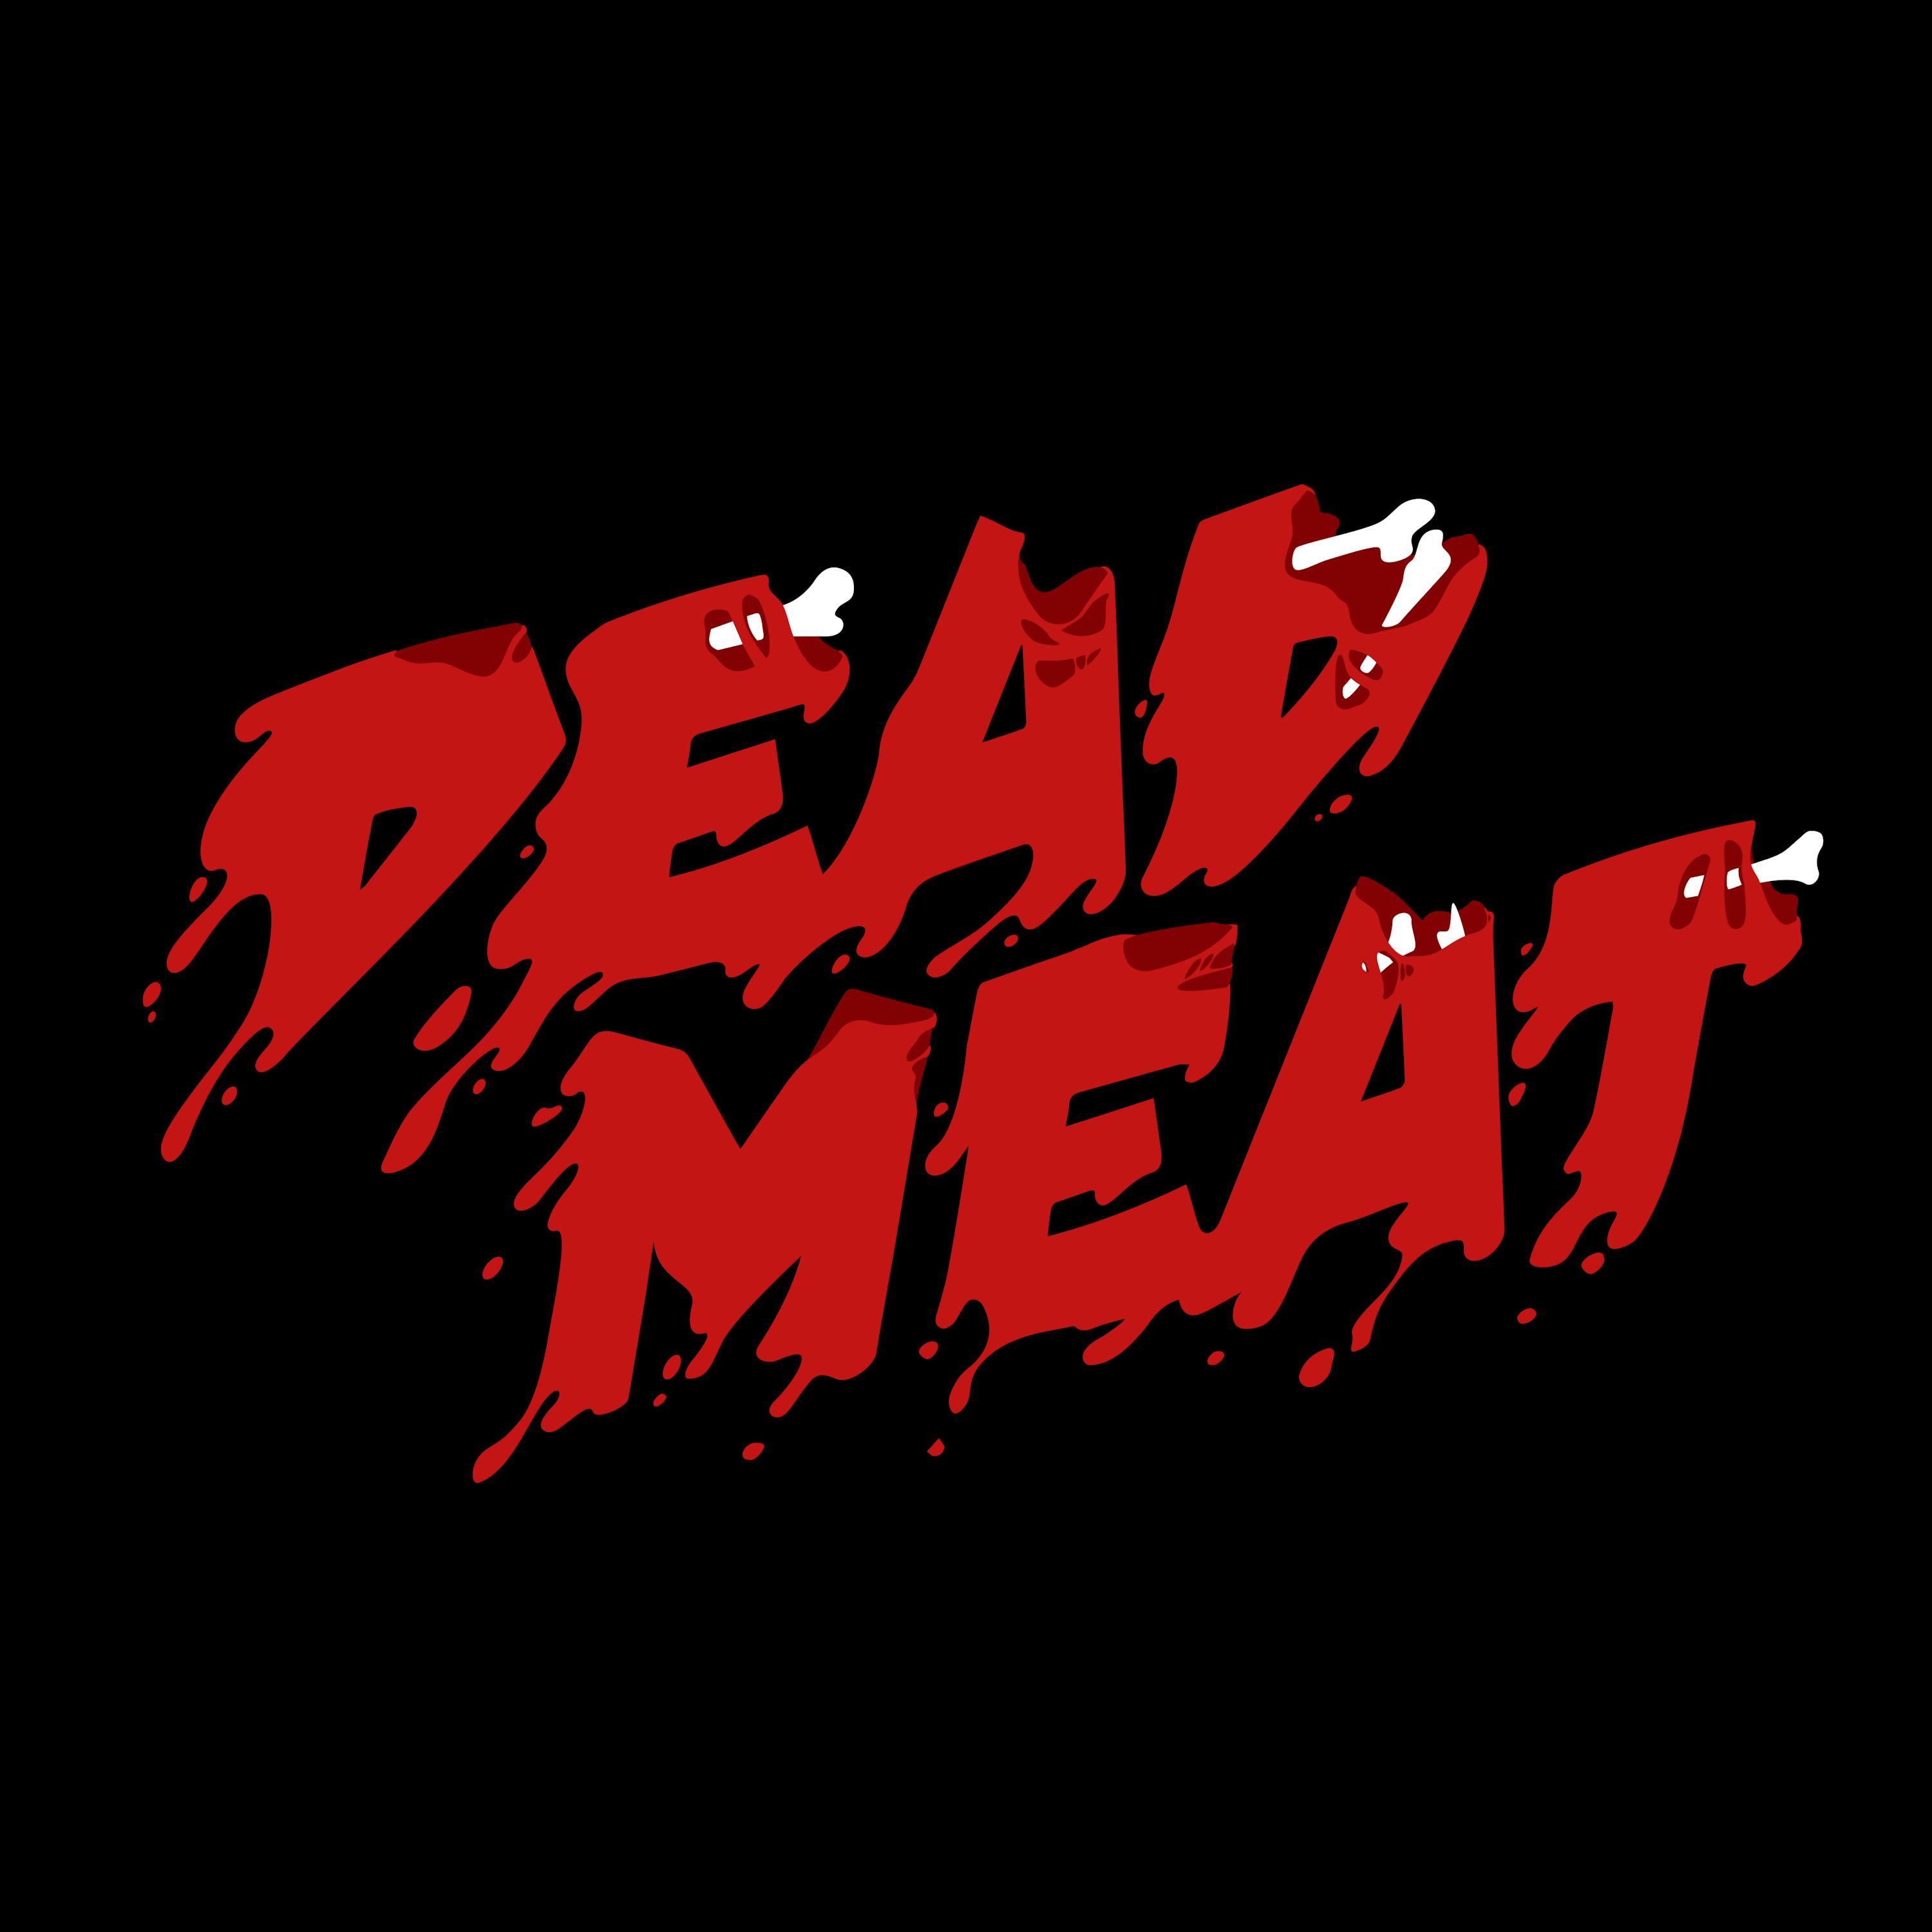 Dead meat. Sematary лого.